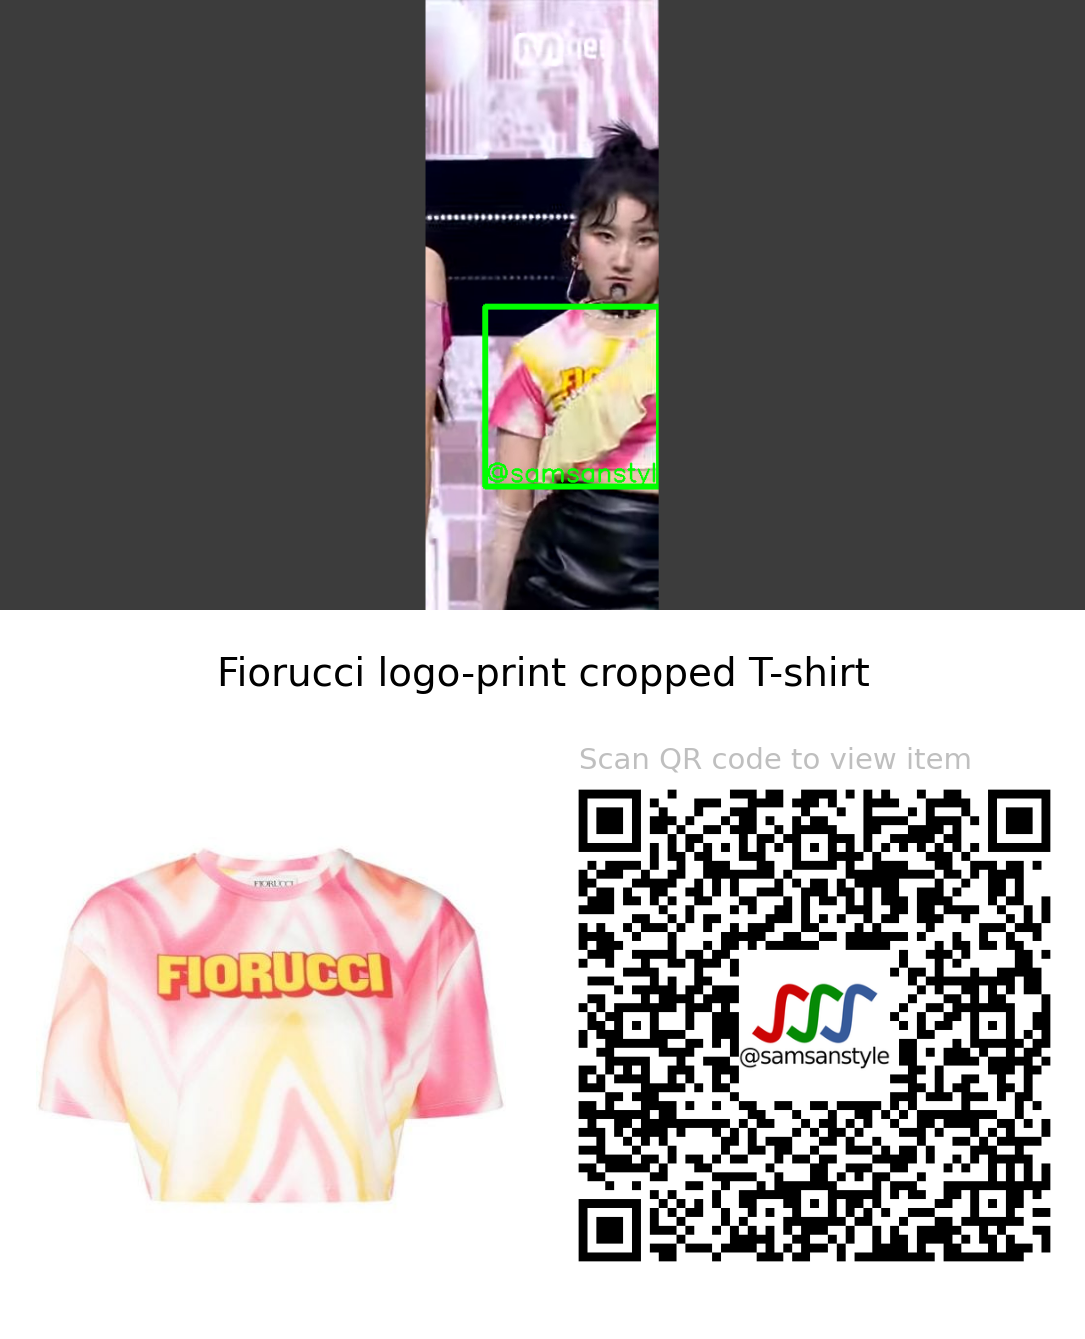 LAPILLUS Shana | GRATATA Mnet M Countdown | Fiorucci logo-print cropped T-shirt